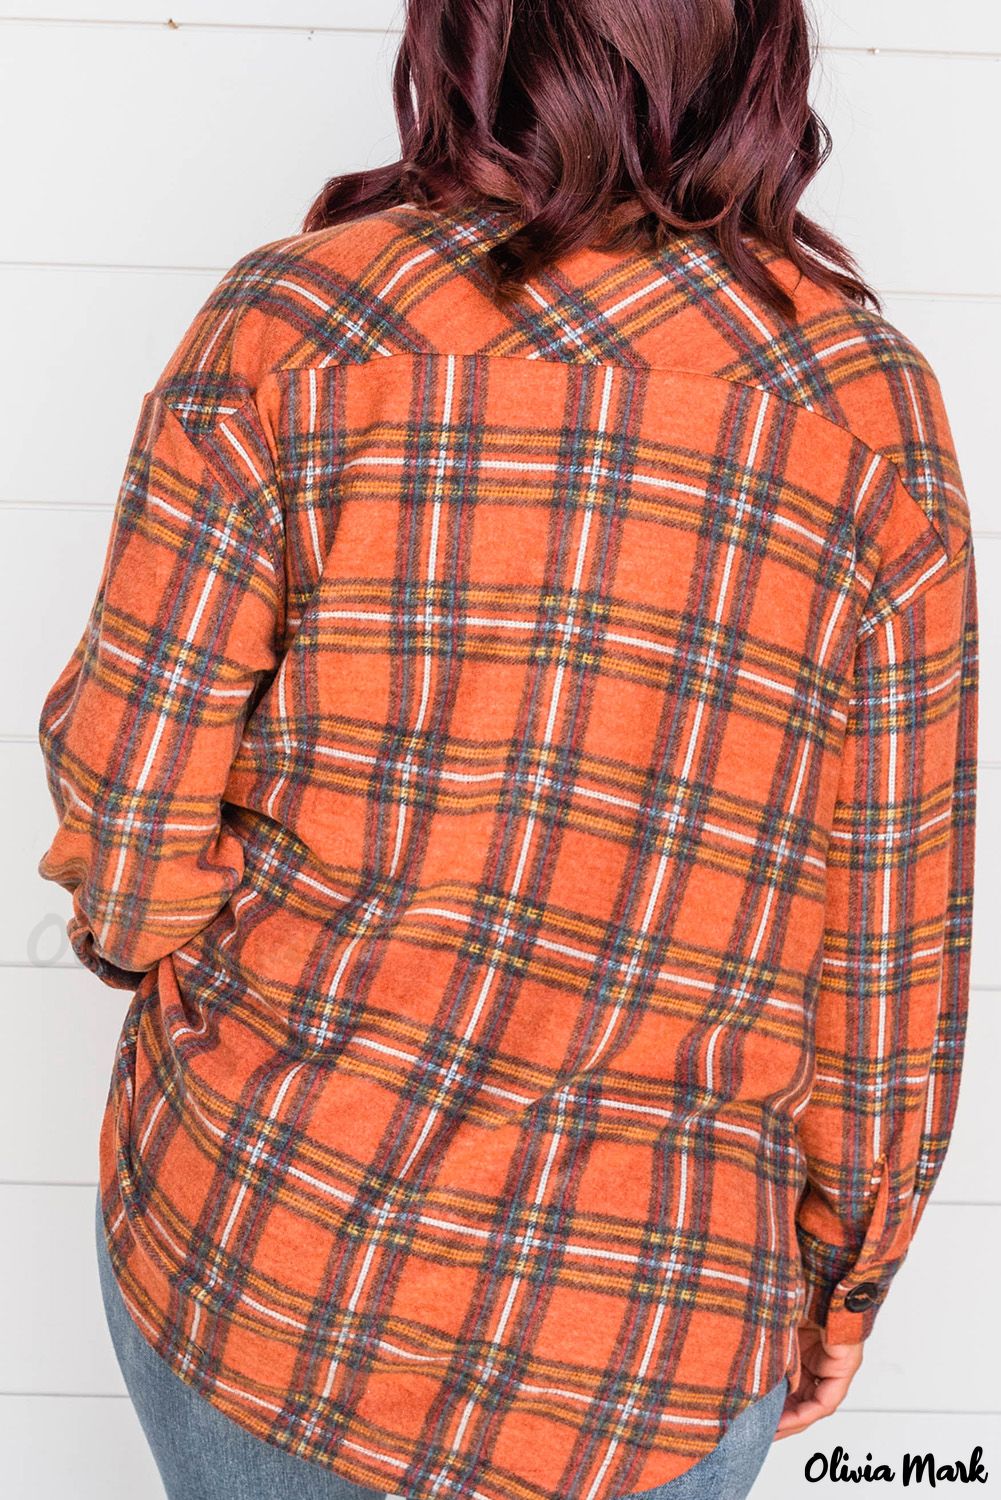 Olivia Mark – Orange flannel plaid shirt with chest pockets – Olivia Mark